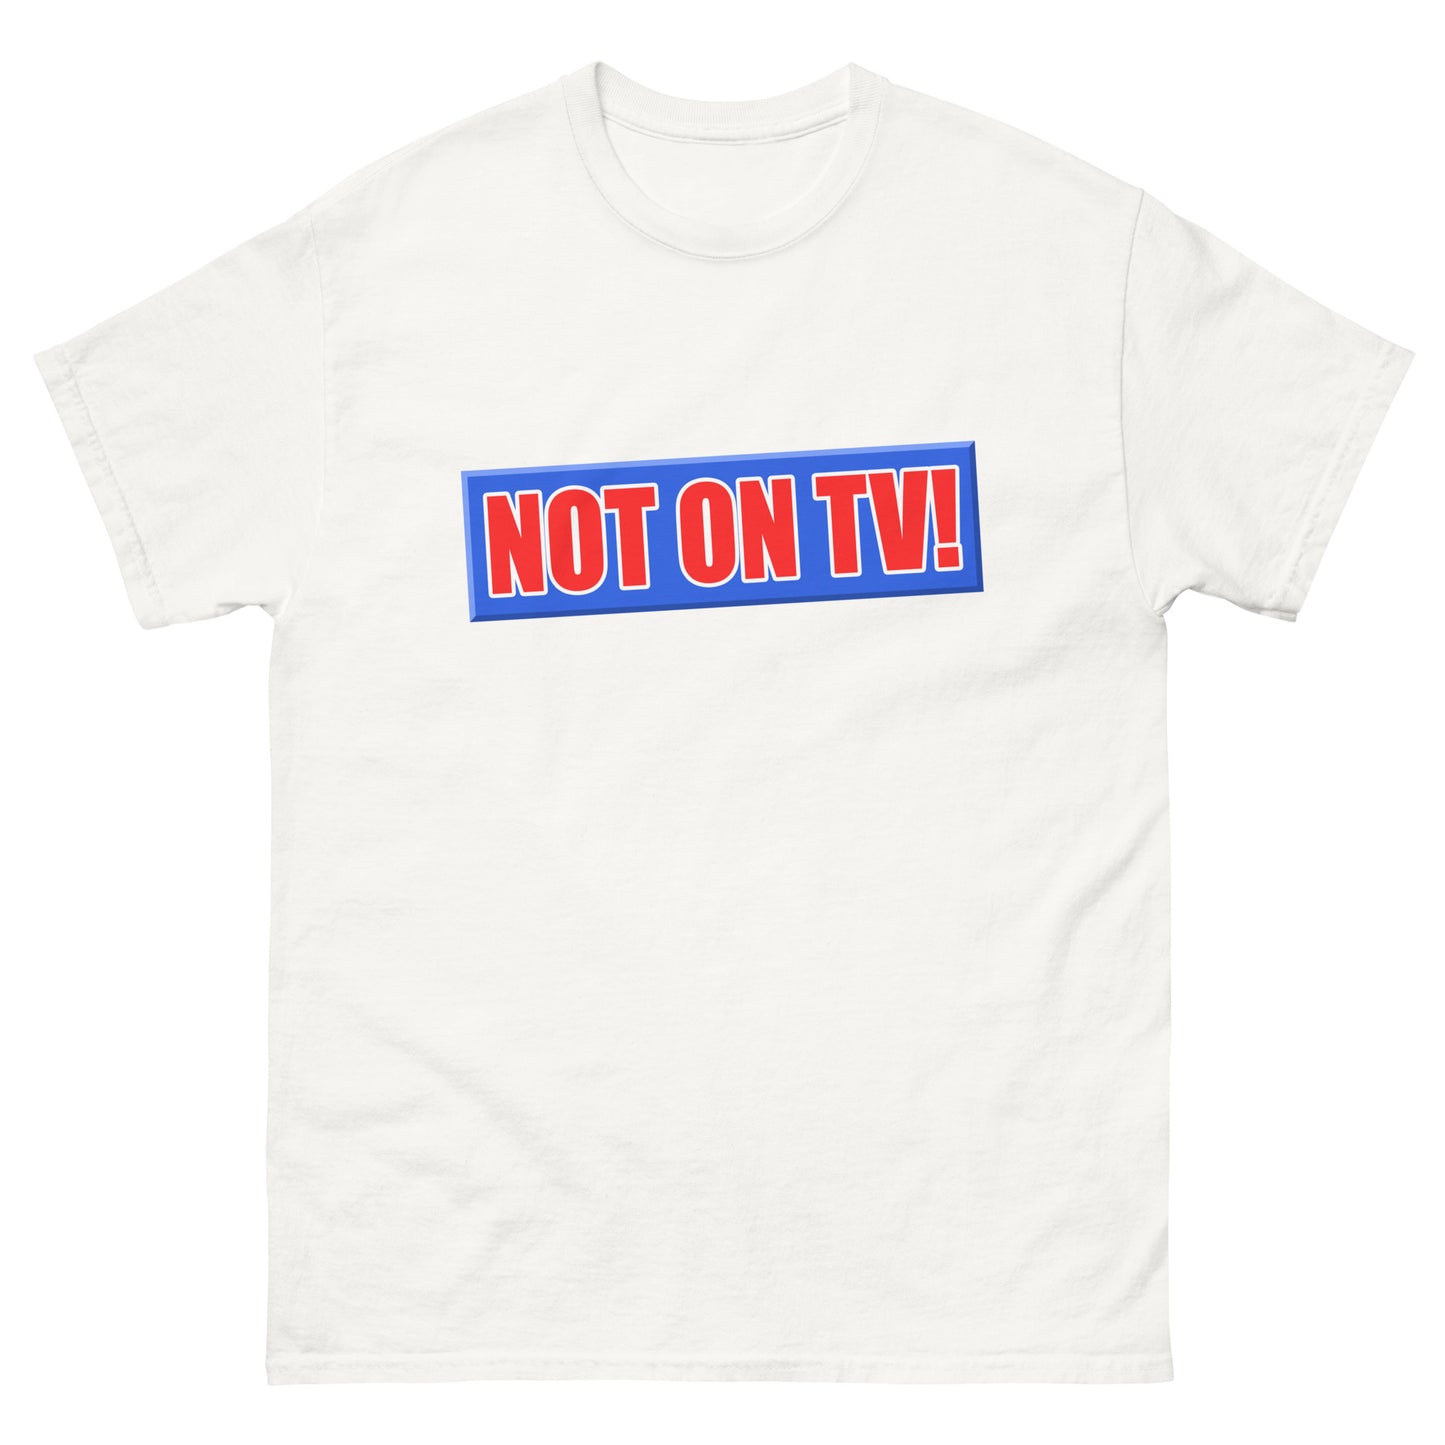 NOT ON TV! t-shirt